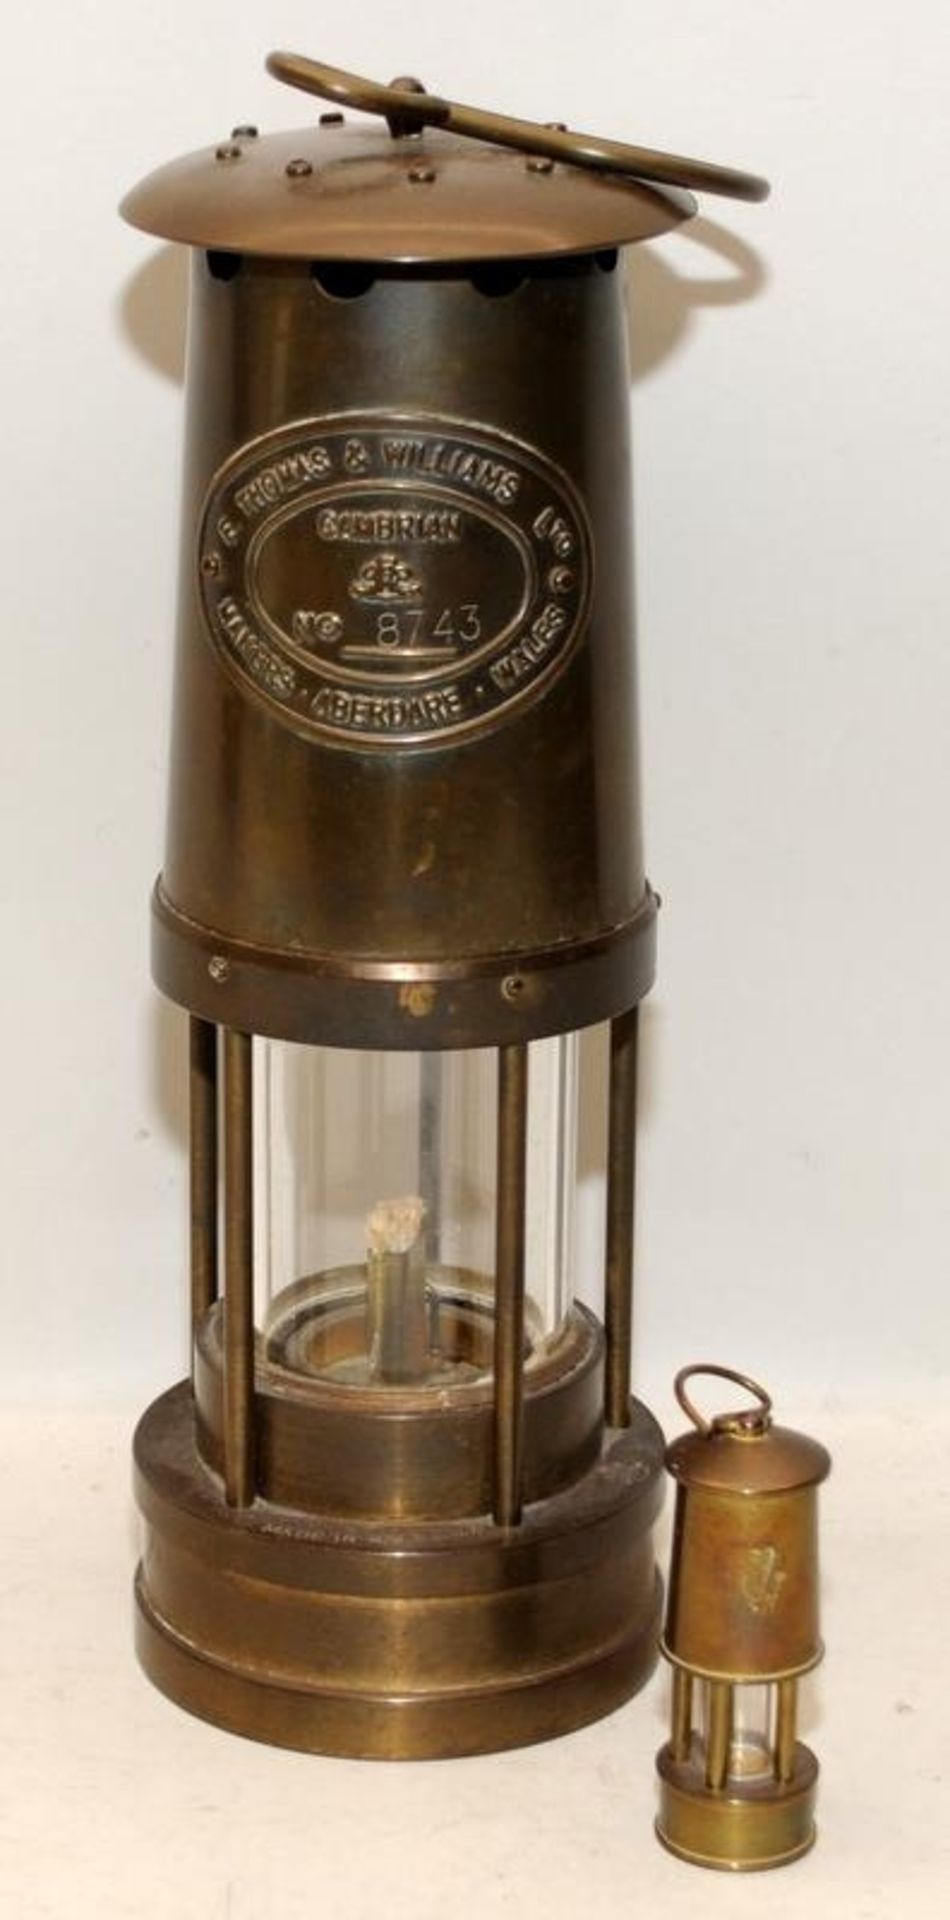 E Thomas & Williams Aberdare brass miners lamp c/w a vintage miniature example